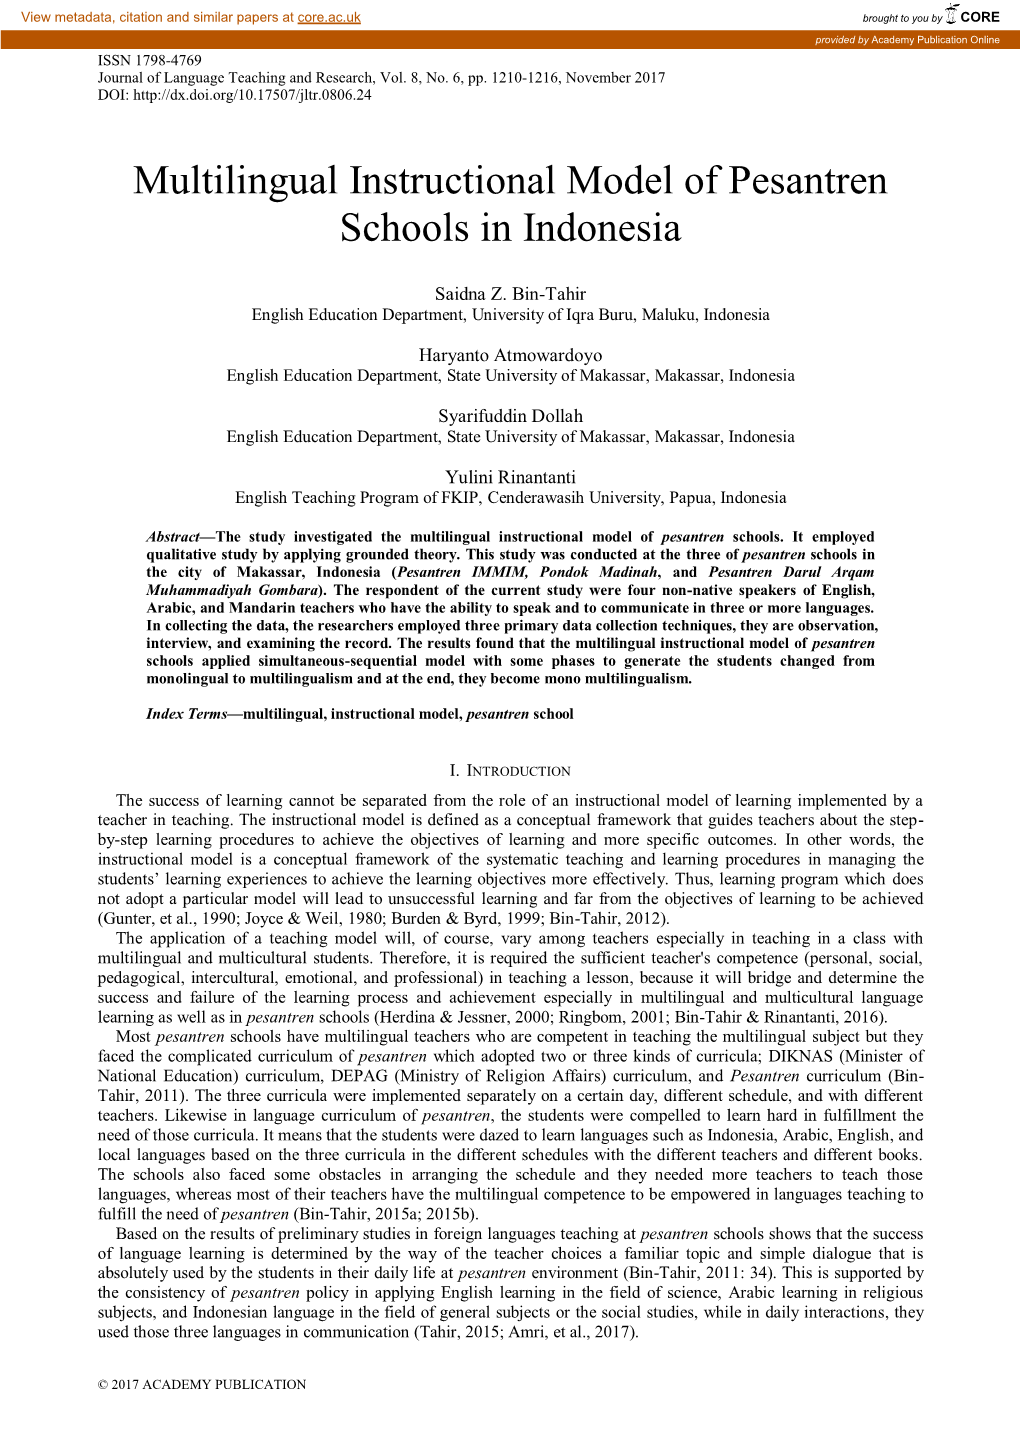 Multilingual Instructional Model of Pesantren Schools in Indonesia